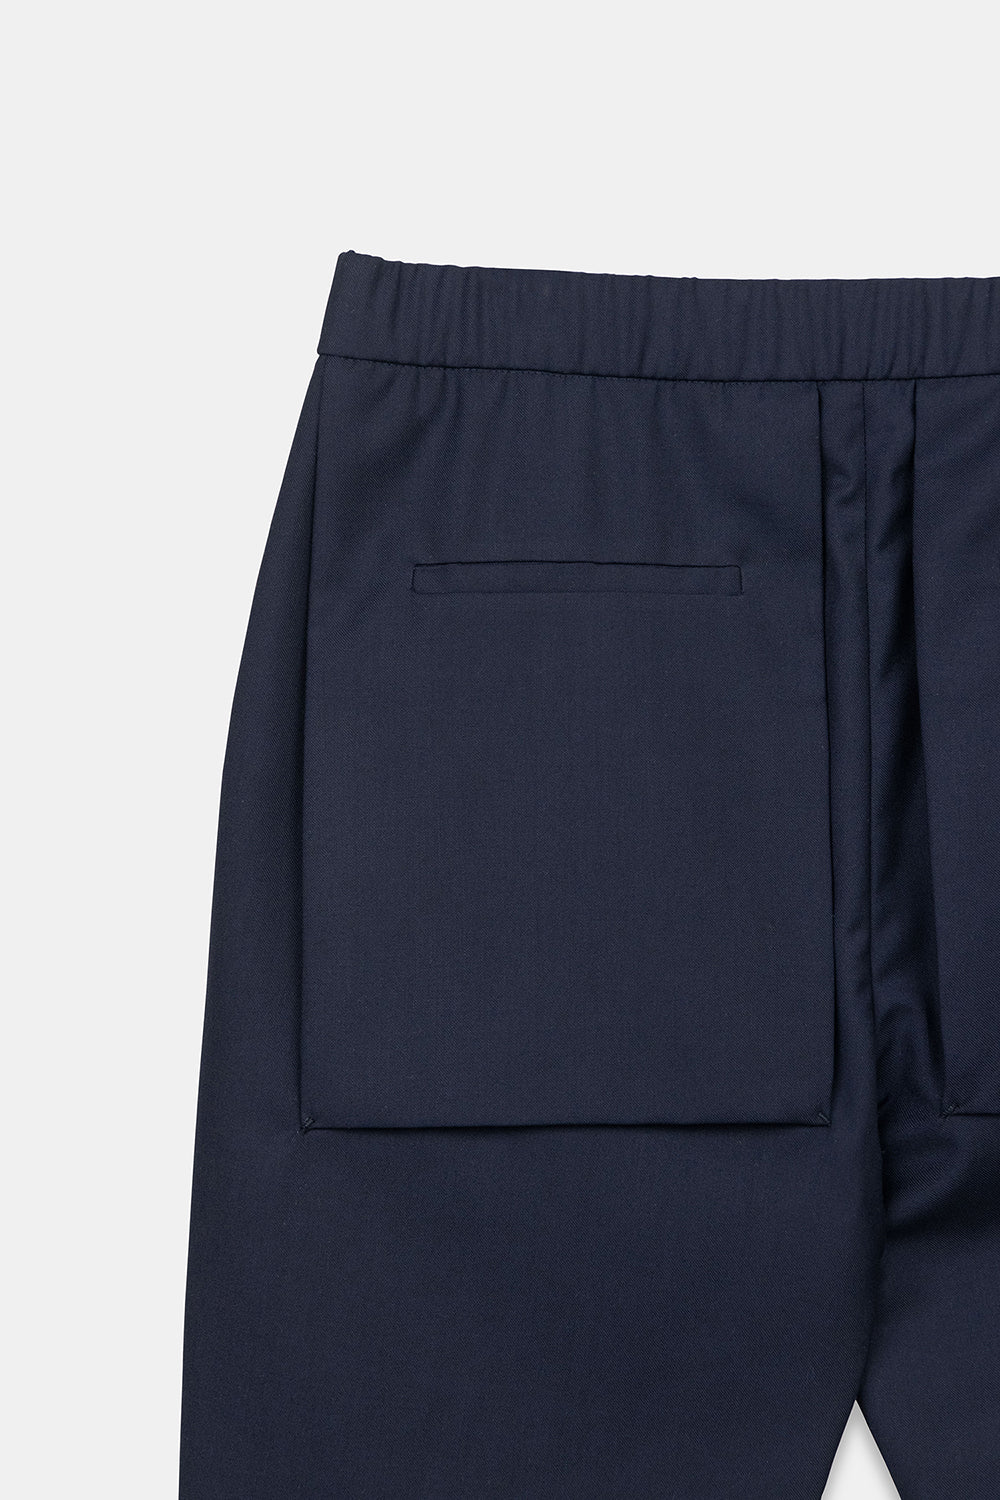 SEANNUNG - MEN - BELLOWS POCKET SHORT 立體口袋短褲